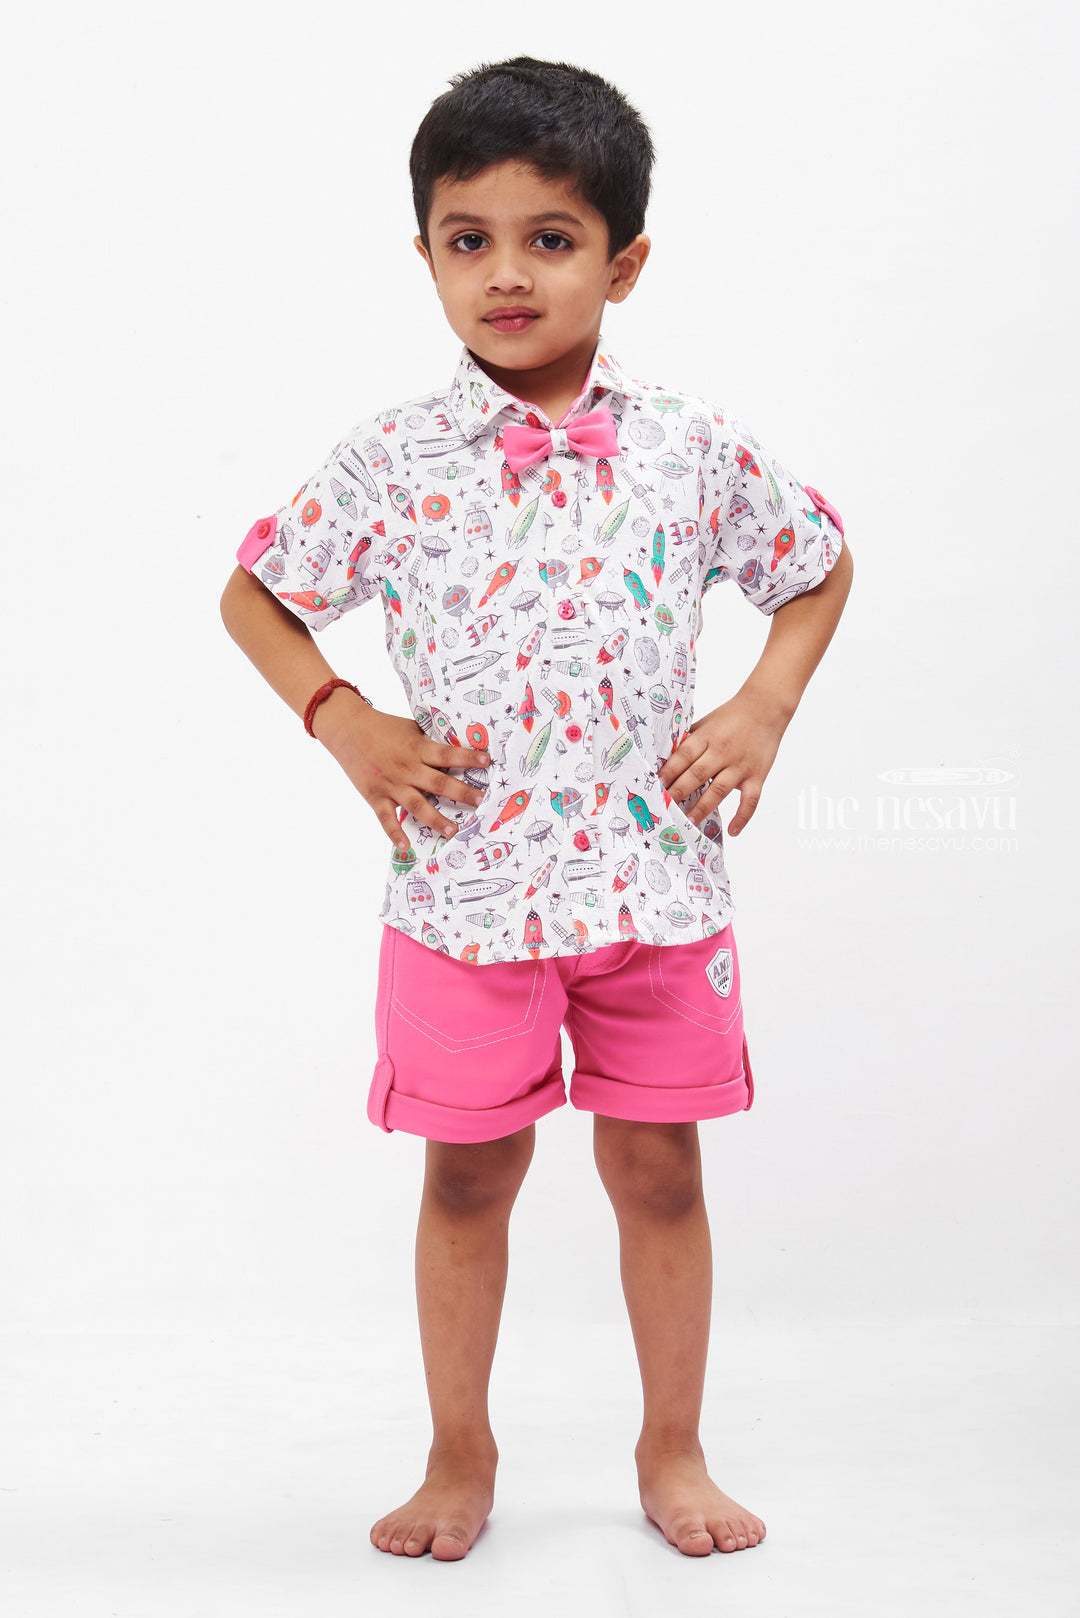 The Nesavu Boys Casual Set Boys Printed Shirt and Vibrant Pink Shorts Set - Playful & Casual Nesavu 12 (3M) / Pink BCS001A-12 Boys Space Print Shirt & Pink Shorts Set | Fun Casual Kids Wear | The Nesavu